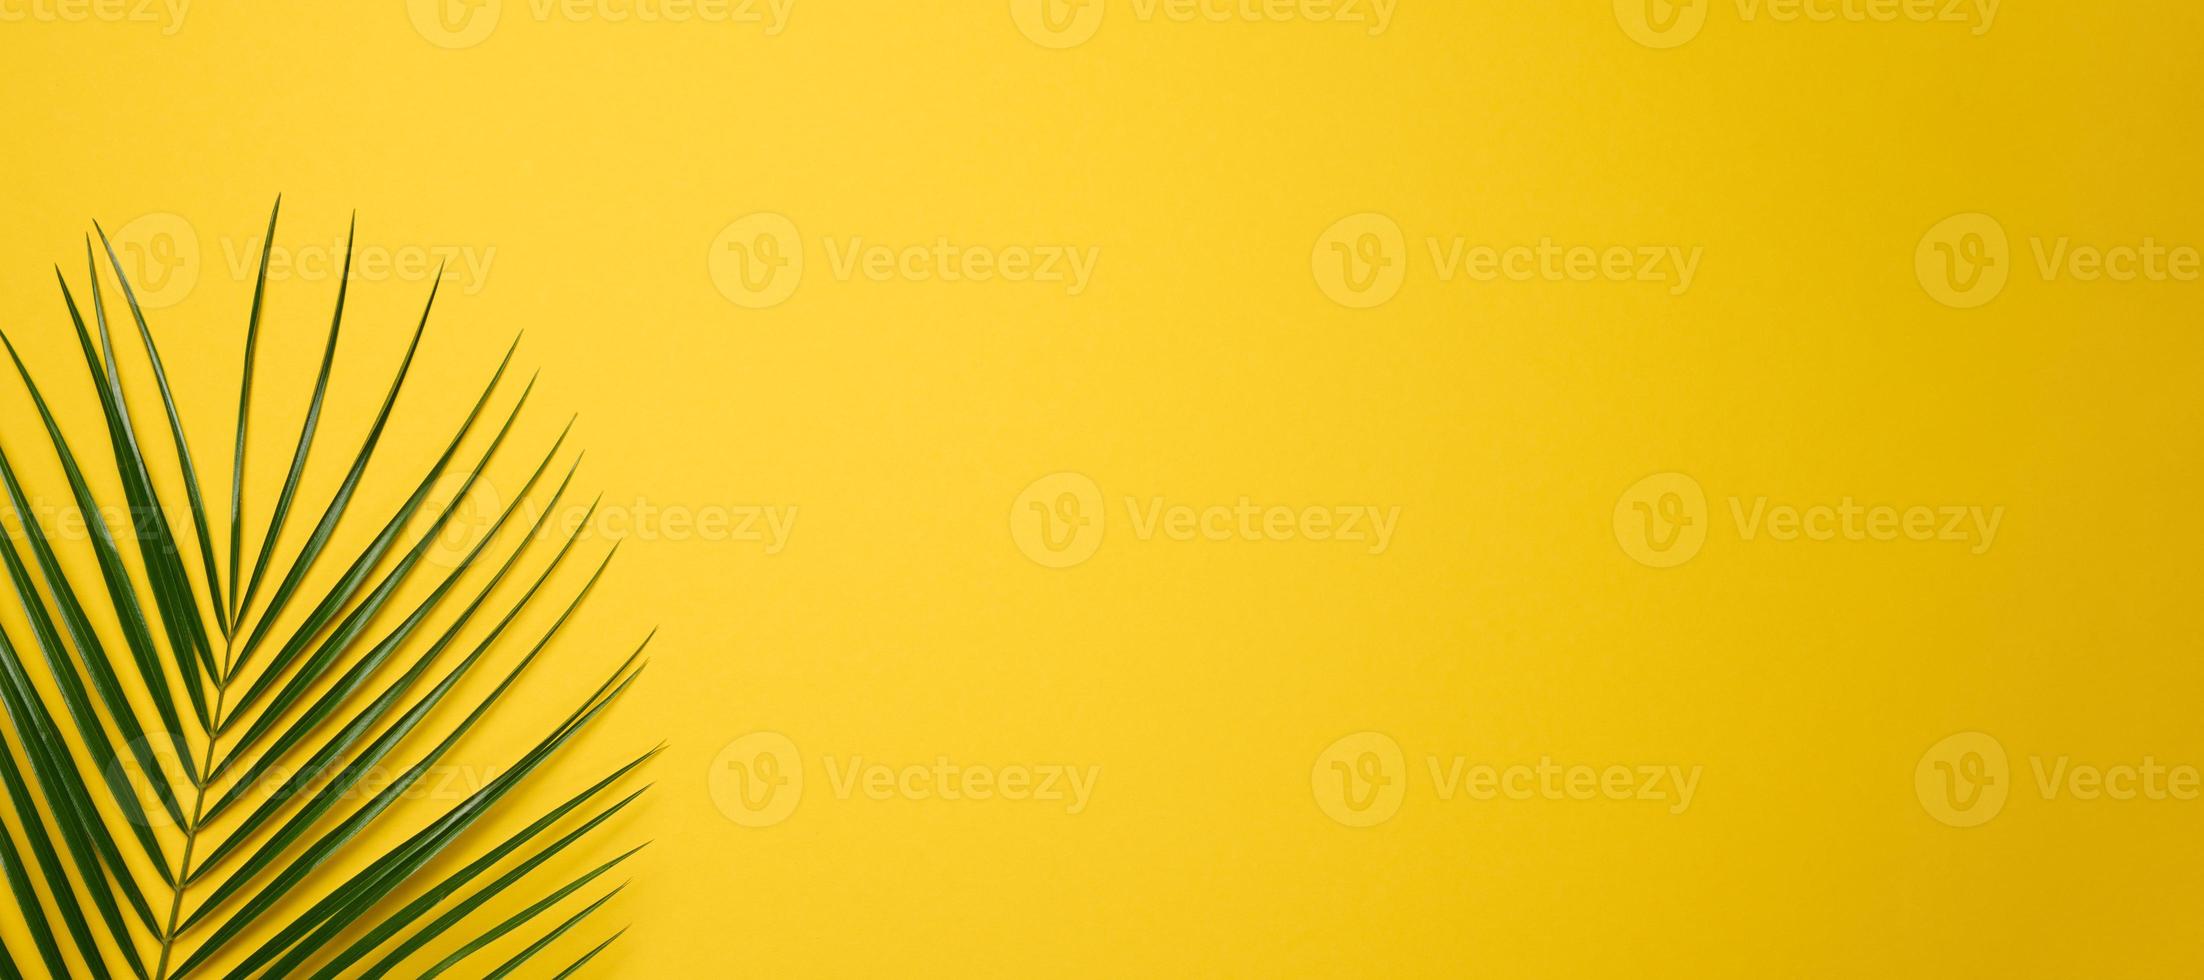 hoja verde de palmera sobre fondo amarillo. vista superior, fondo para texto foto